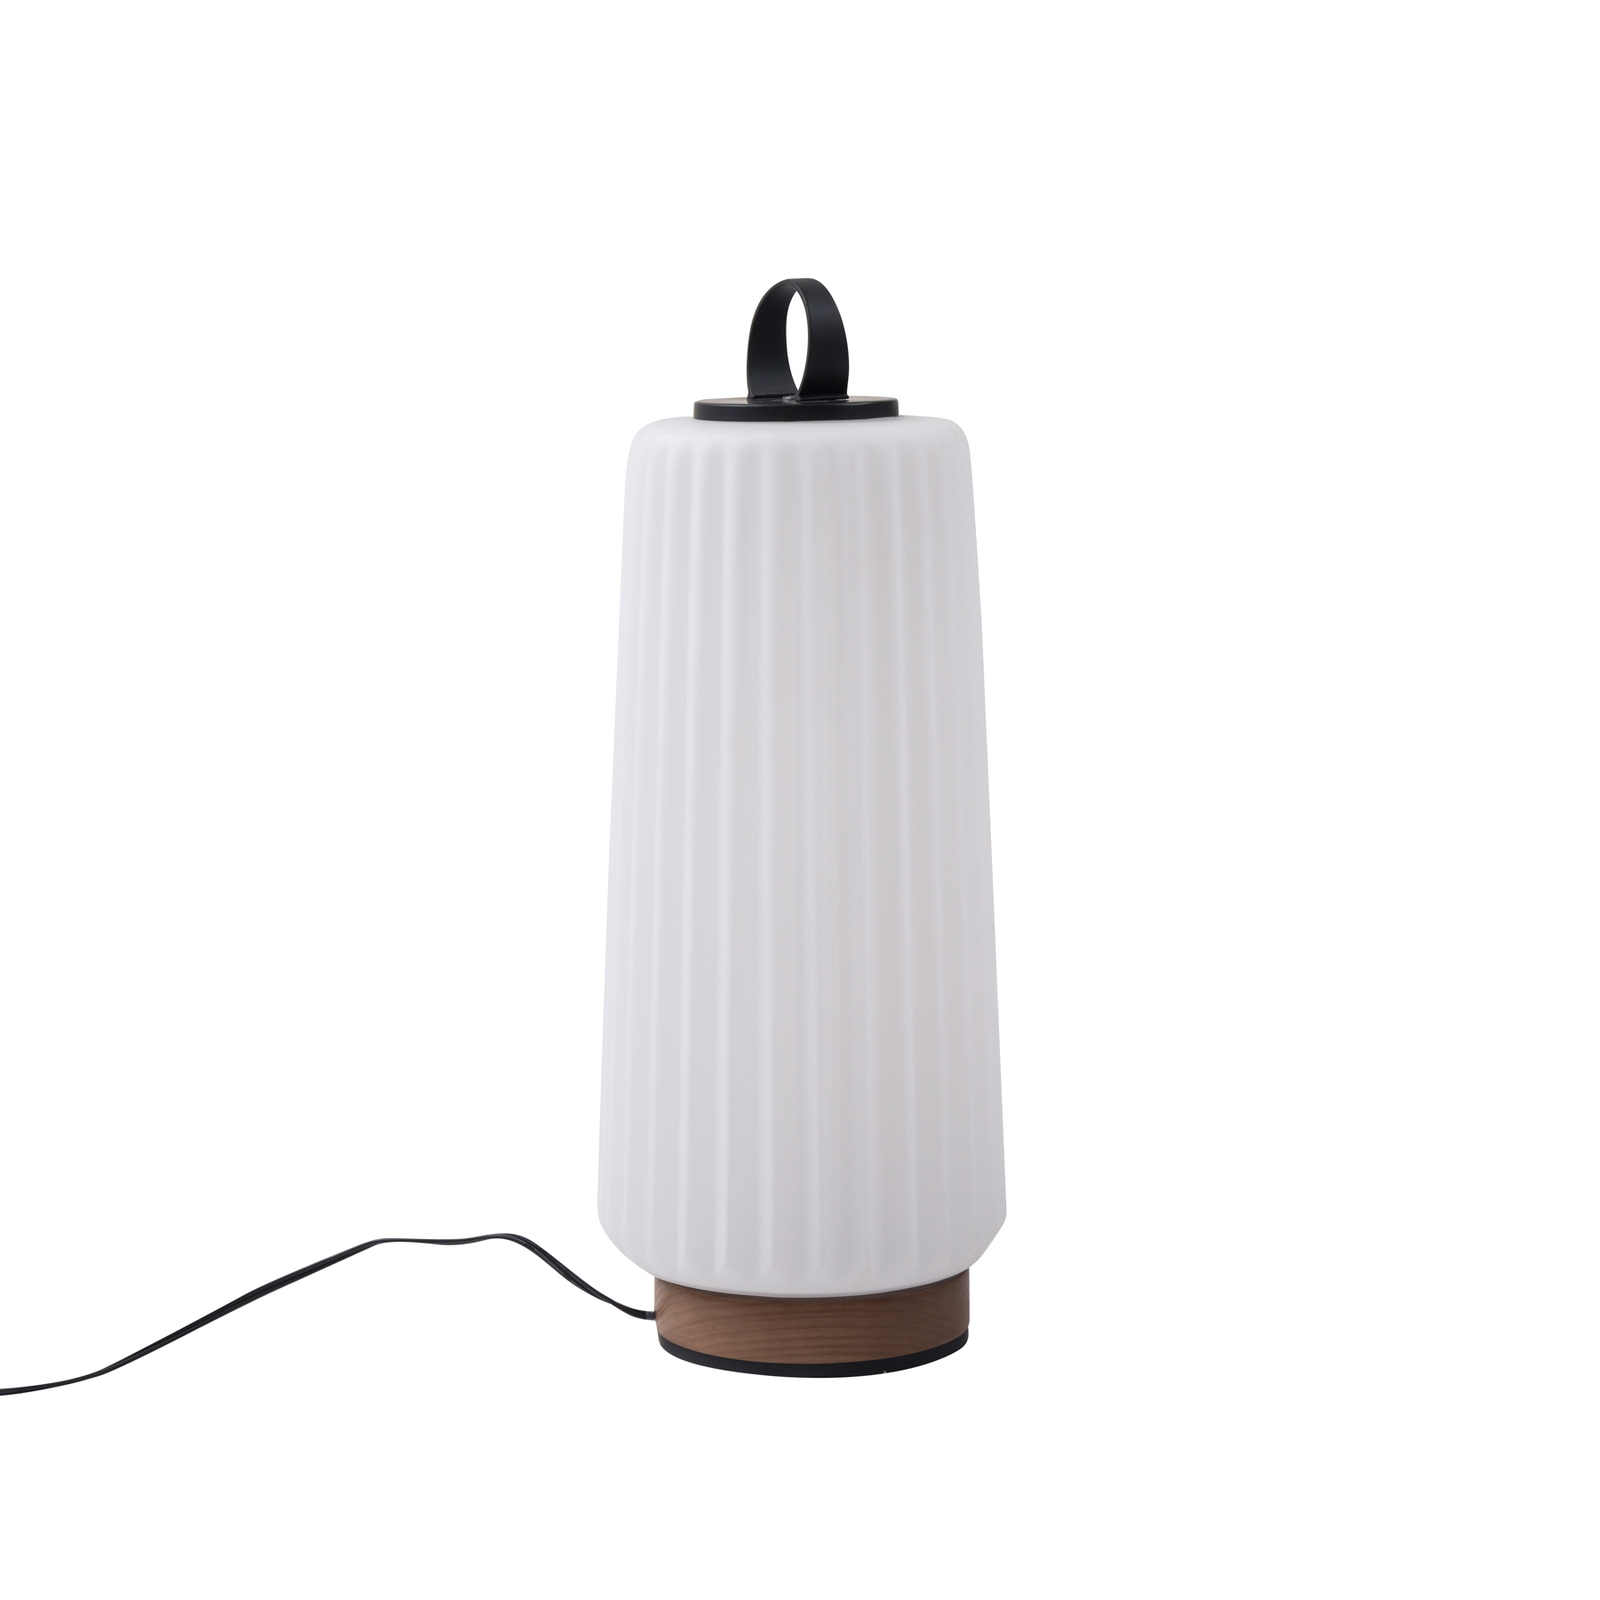 Lucande Liepa lampe de table LED, dimmable